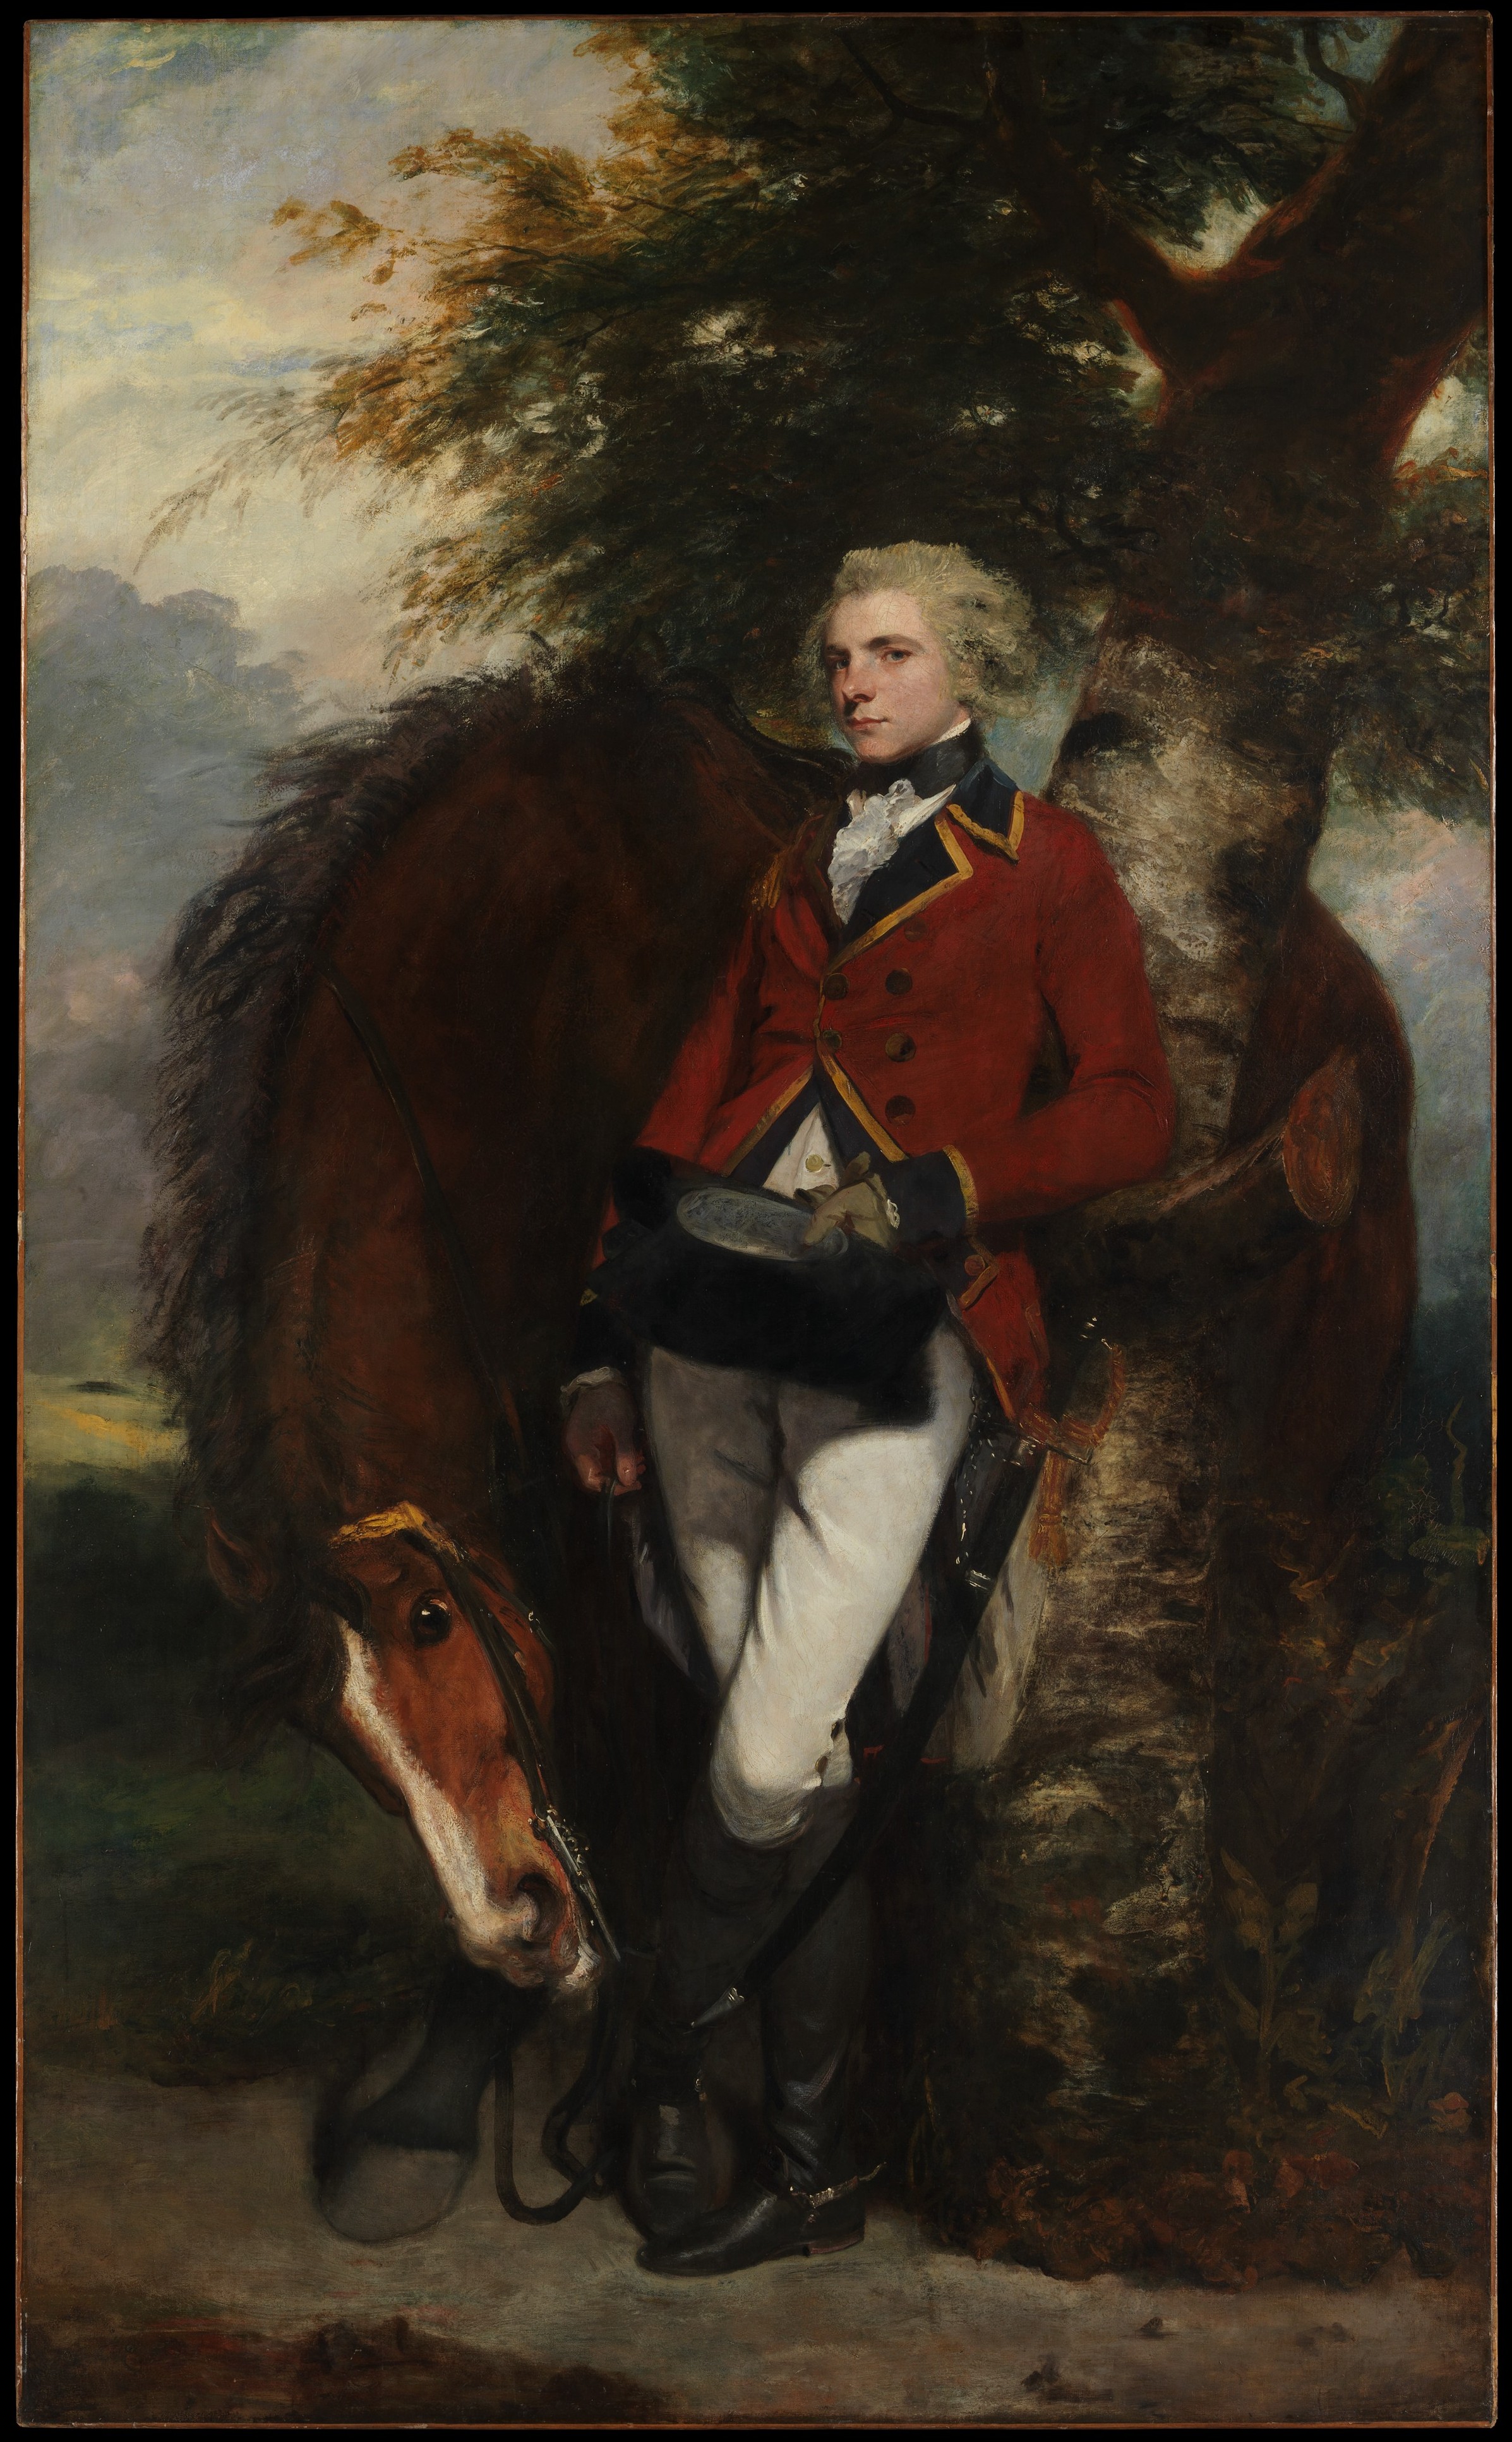 Captain George K. H. Coussmaker by Joshua Reynolds